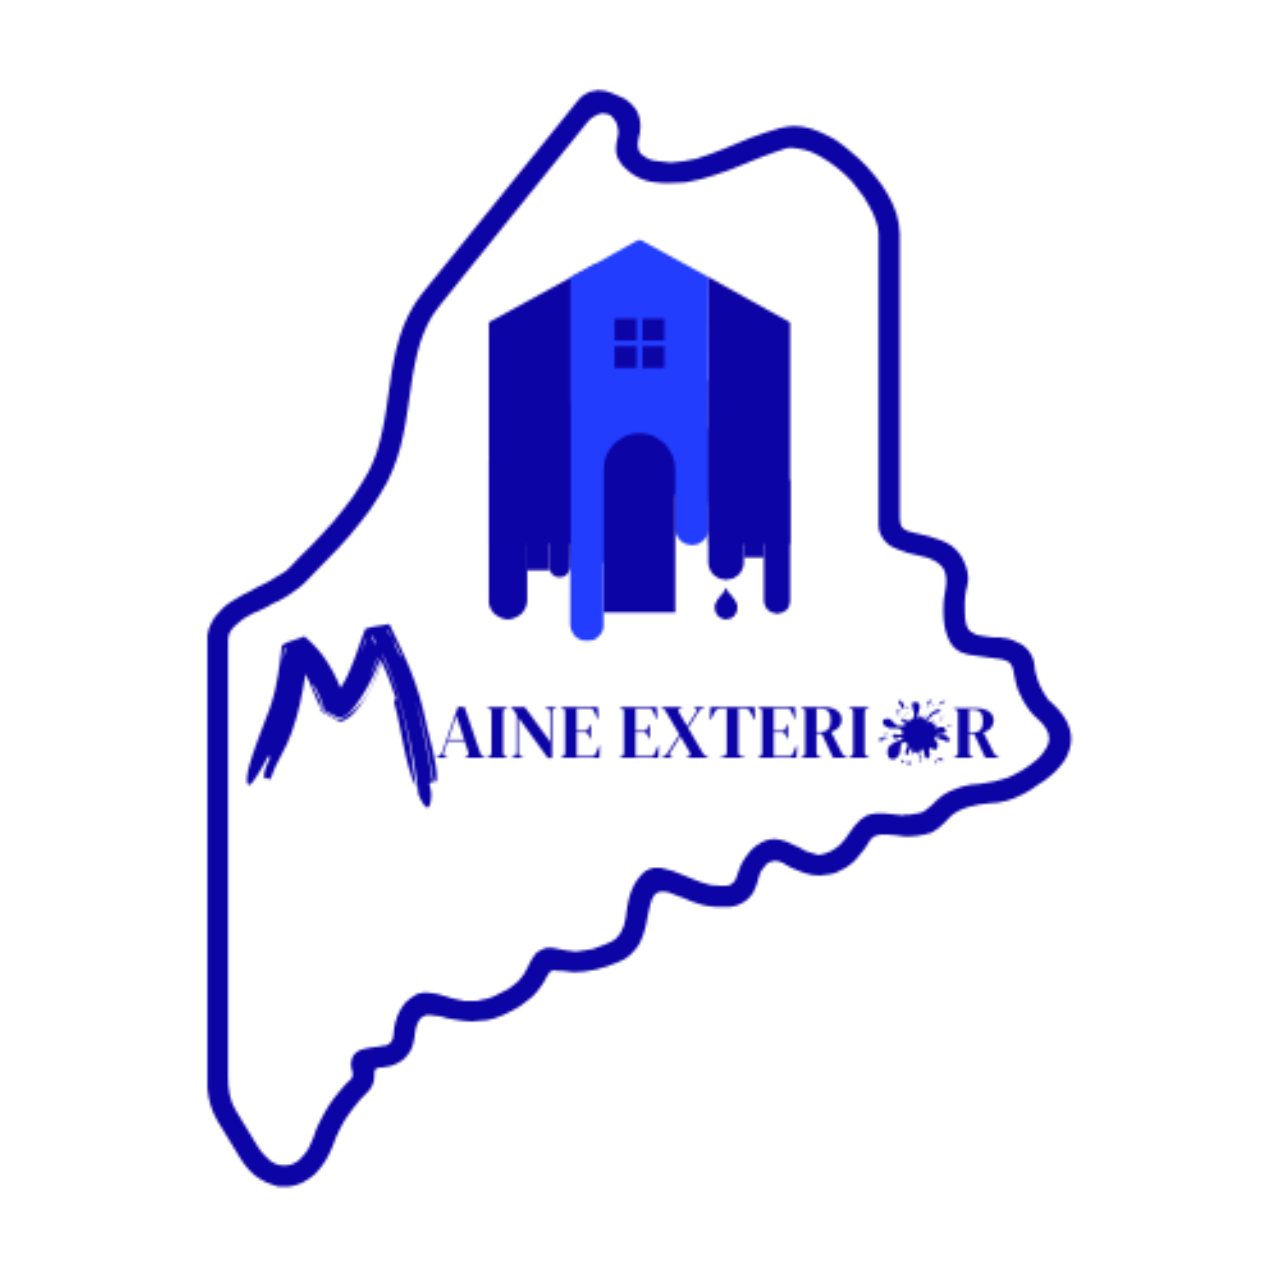 Maine Exterior Lc's logo